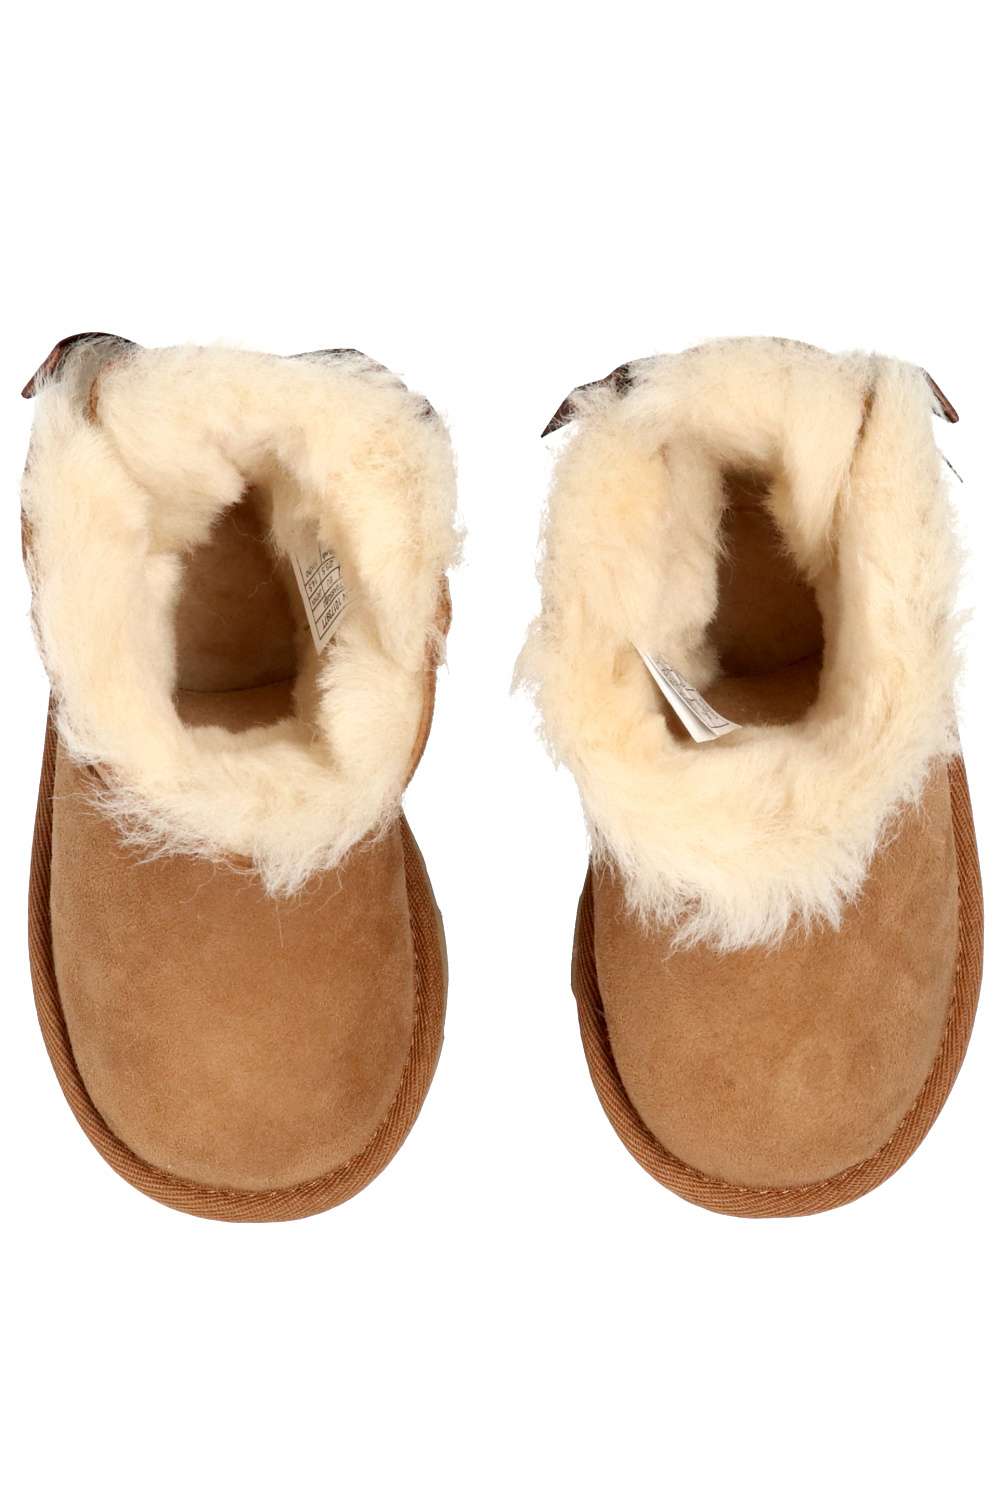 ugg SHORTS Kids ‘Mini Bailey Bow II’ snow boots